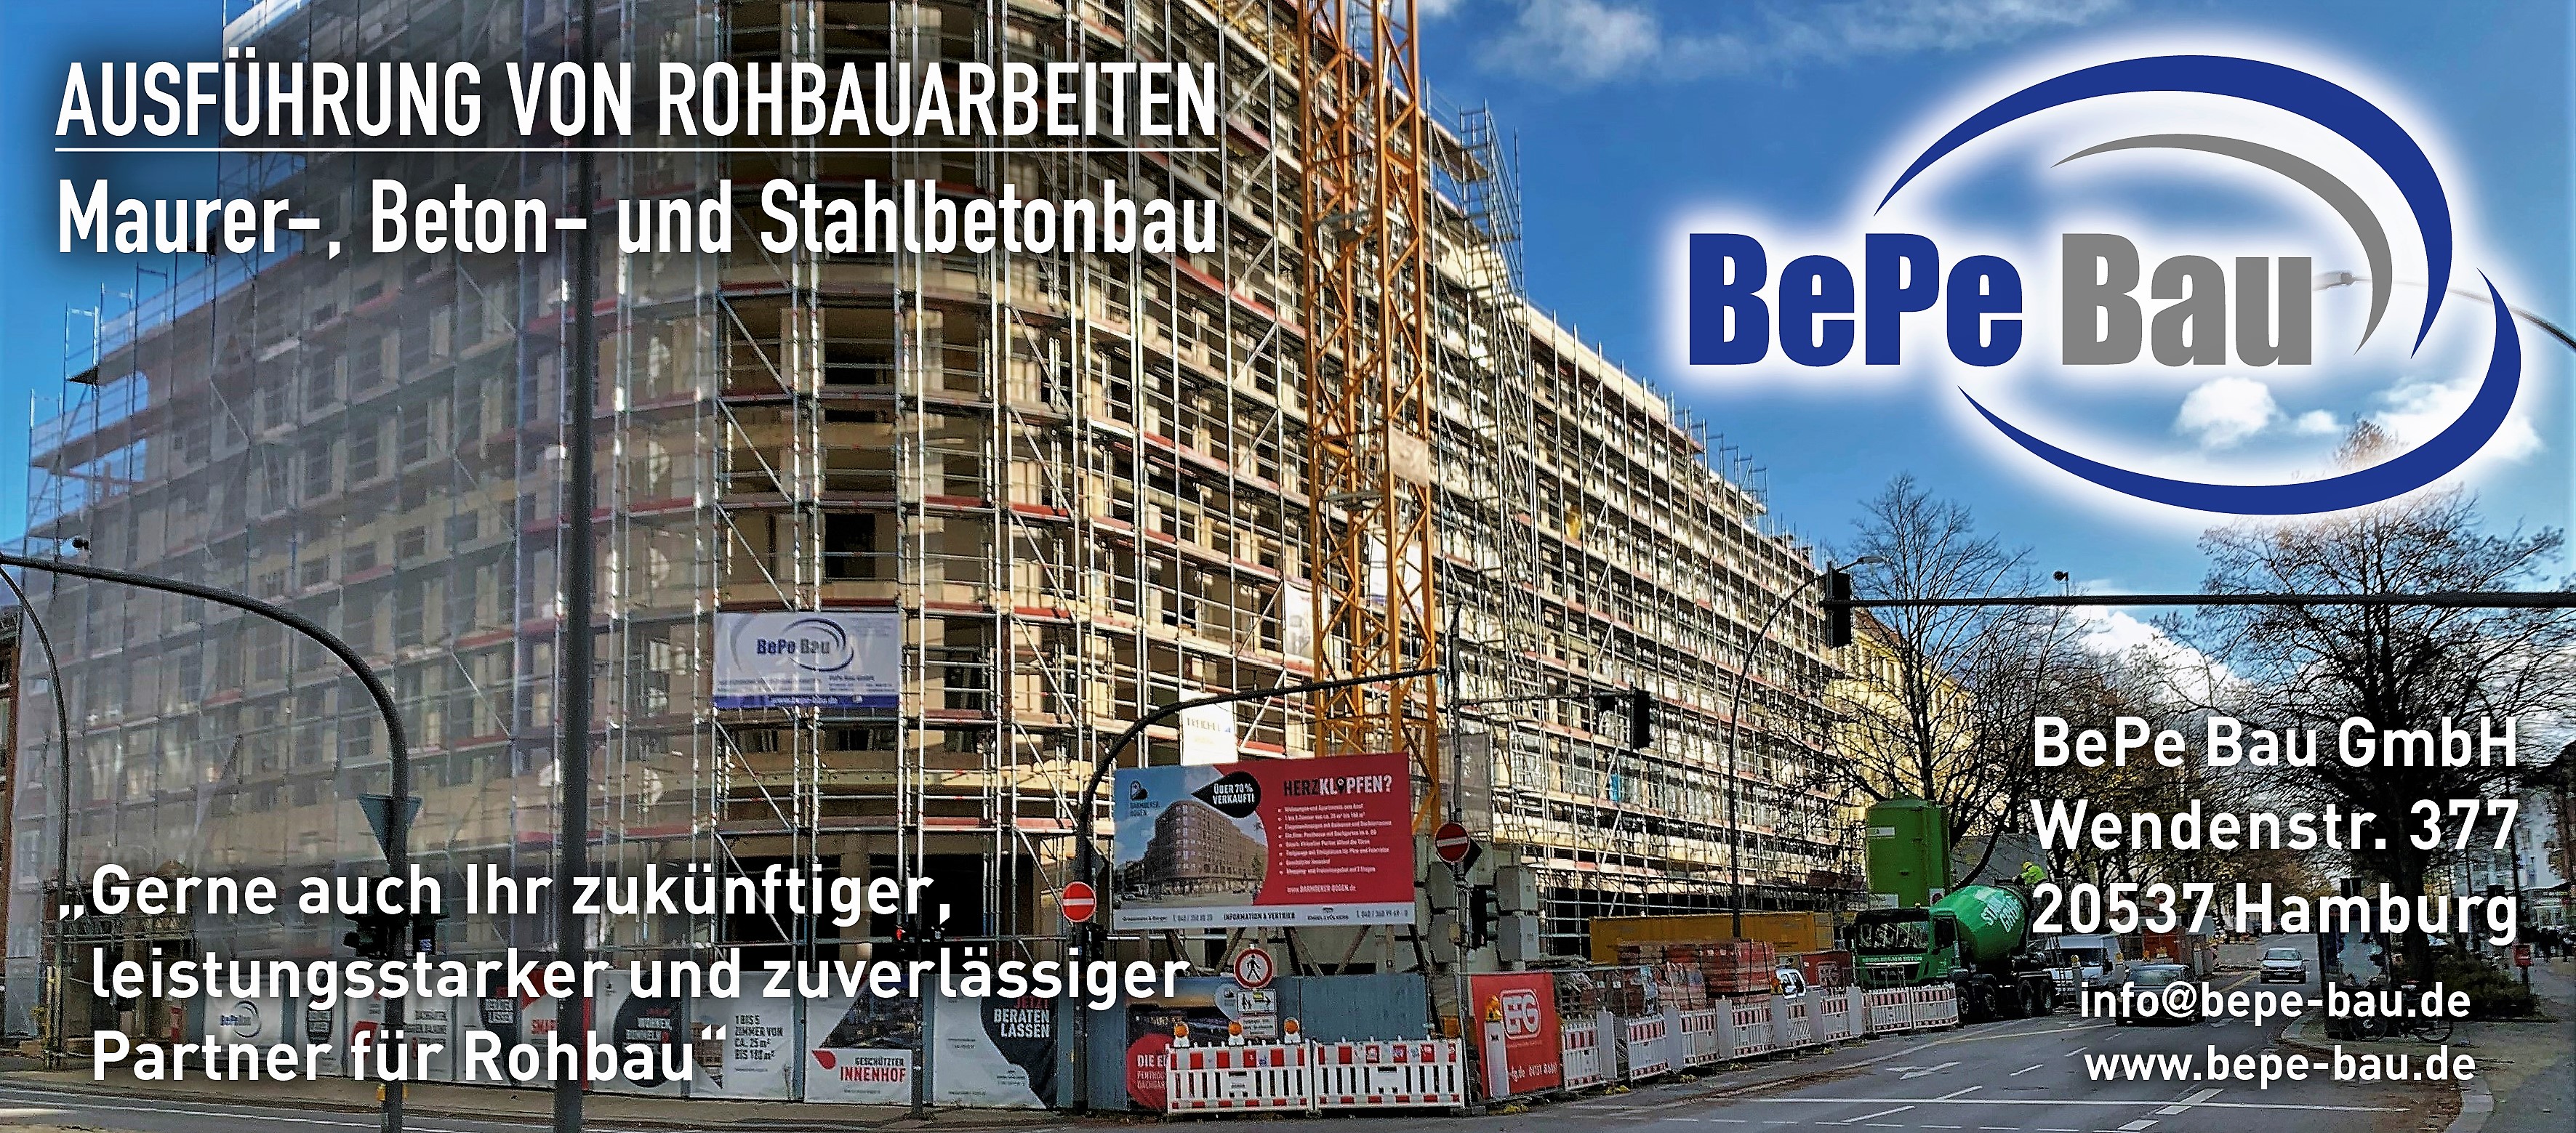 BePe Bau GmbH - Baustelle